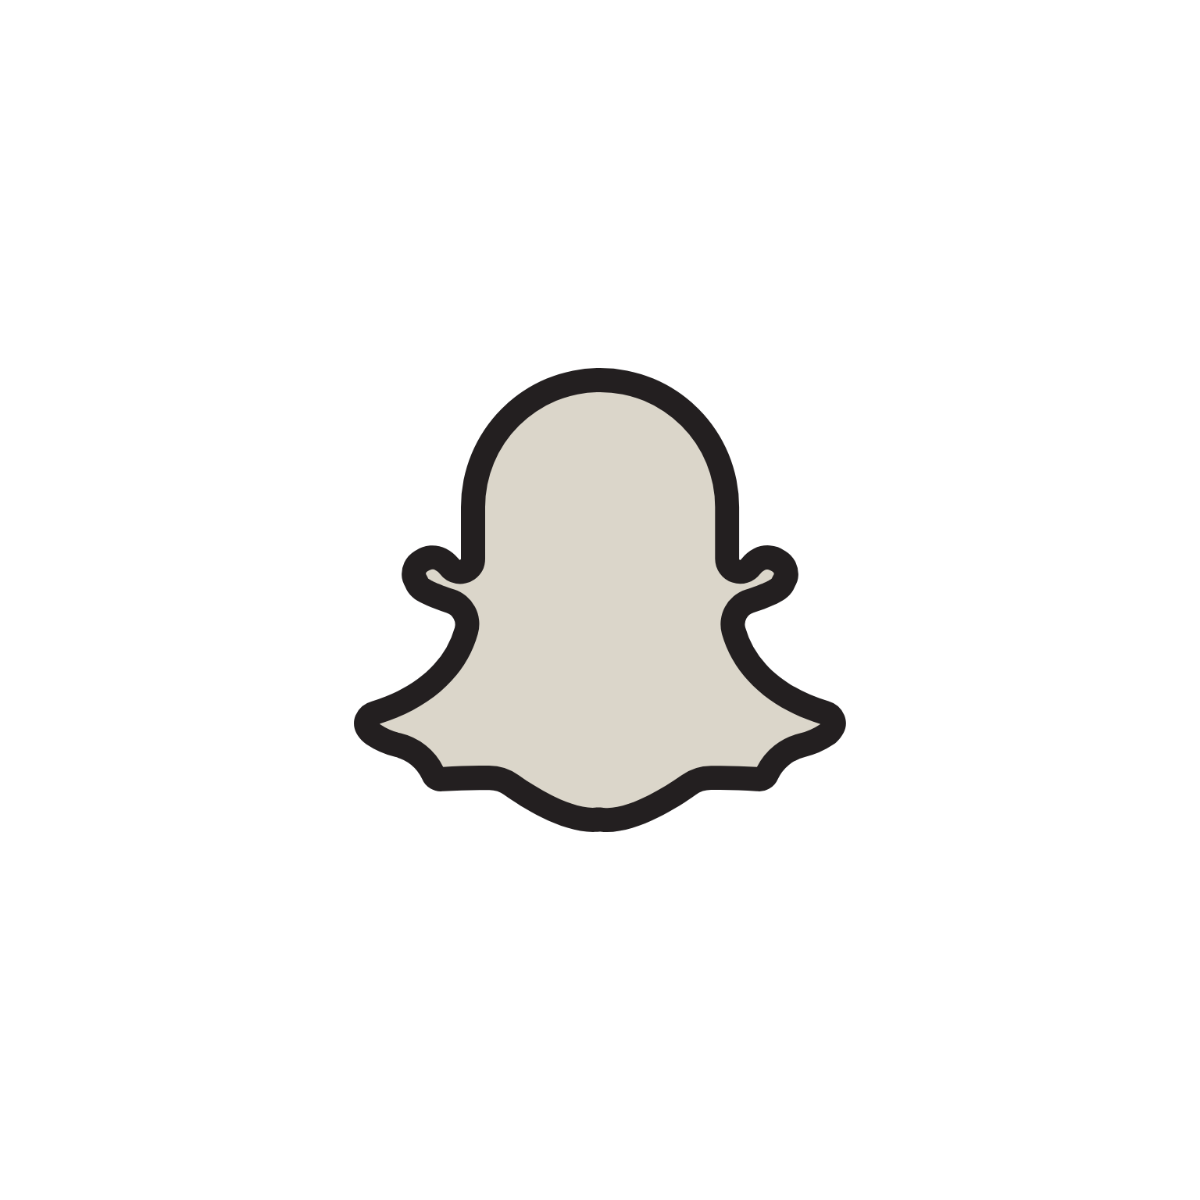 Simple Snapchat